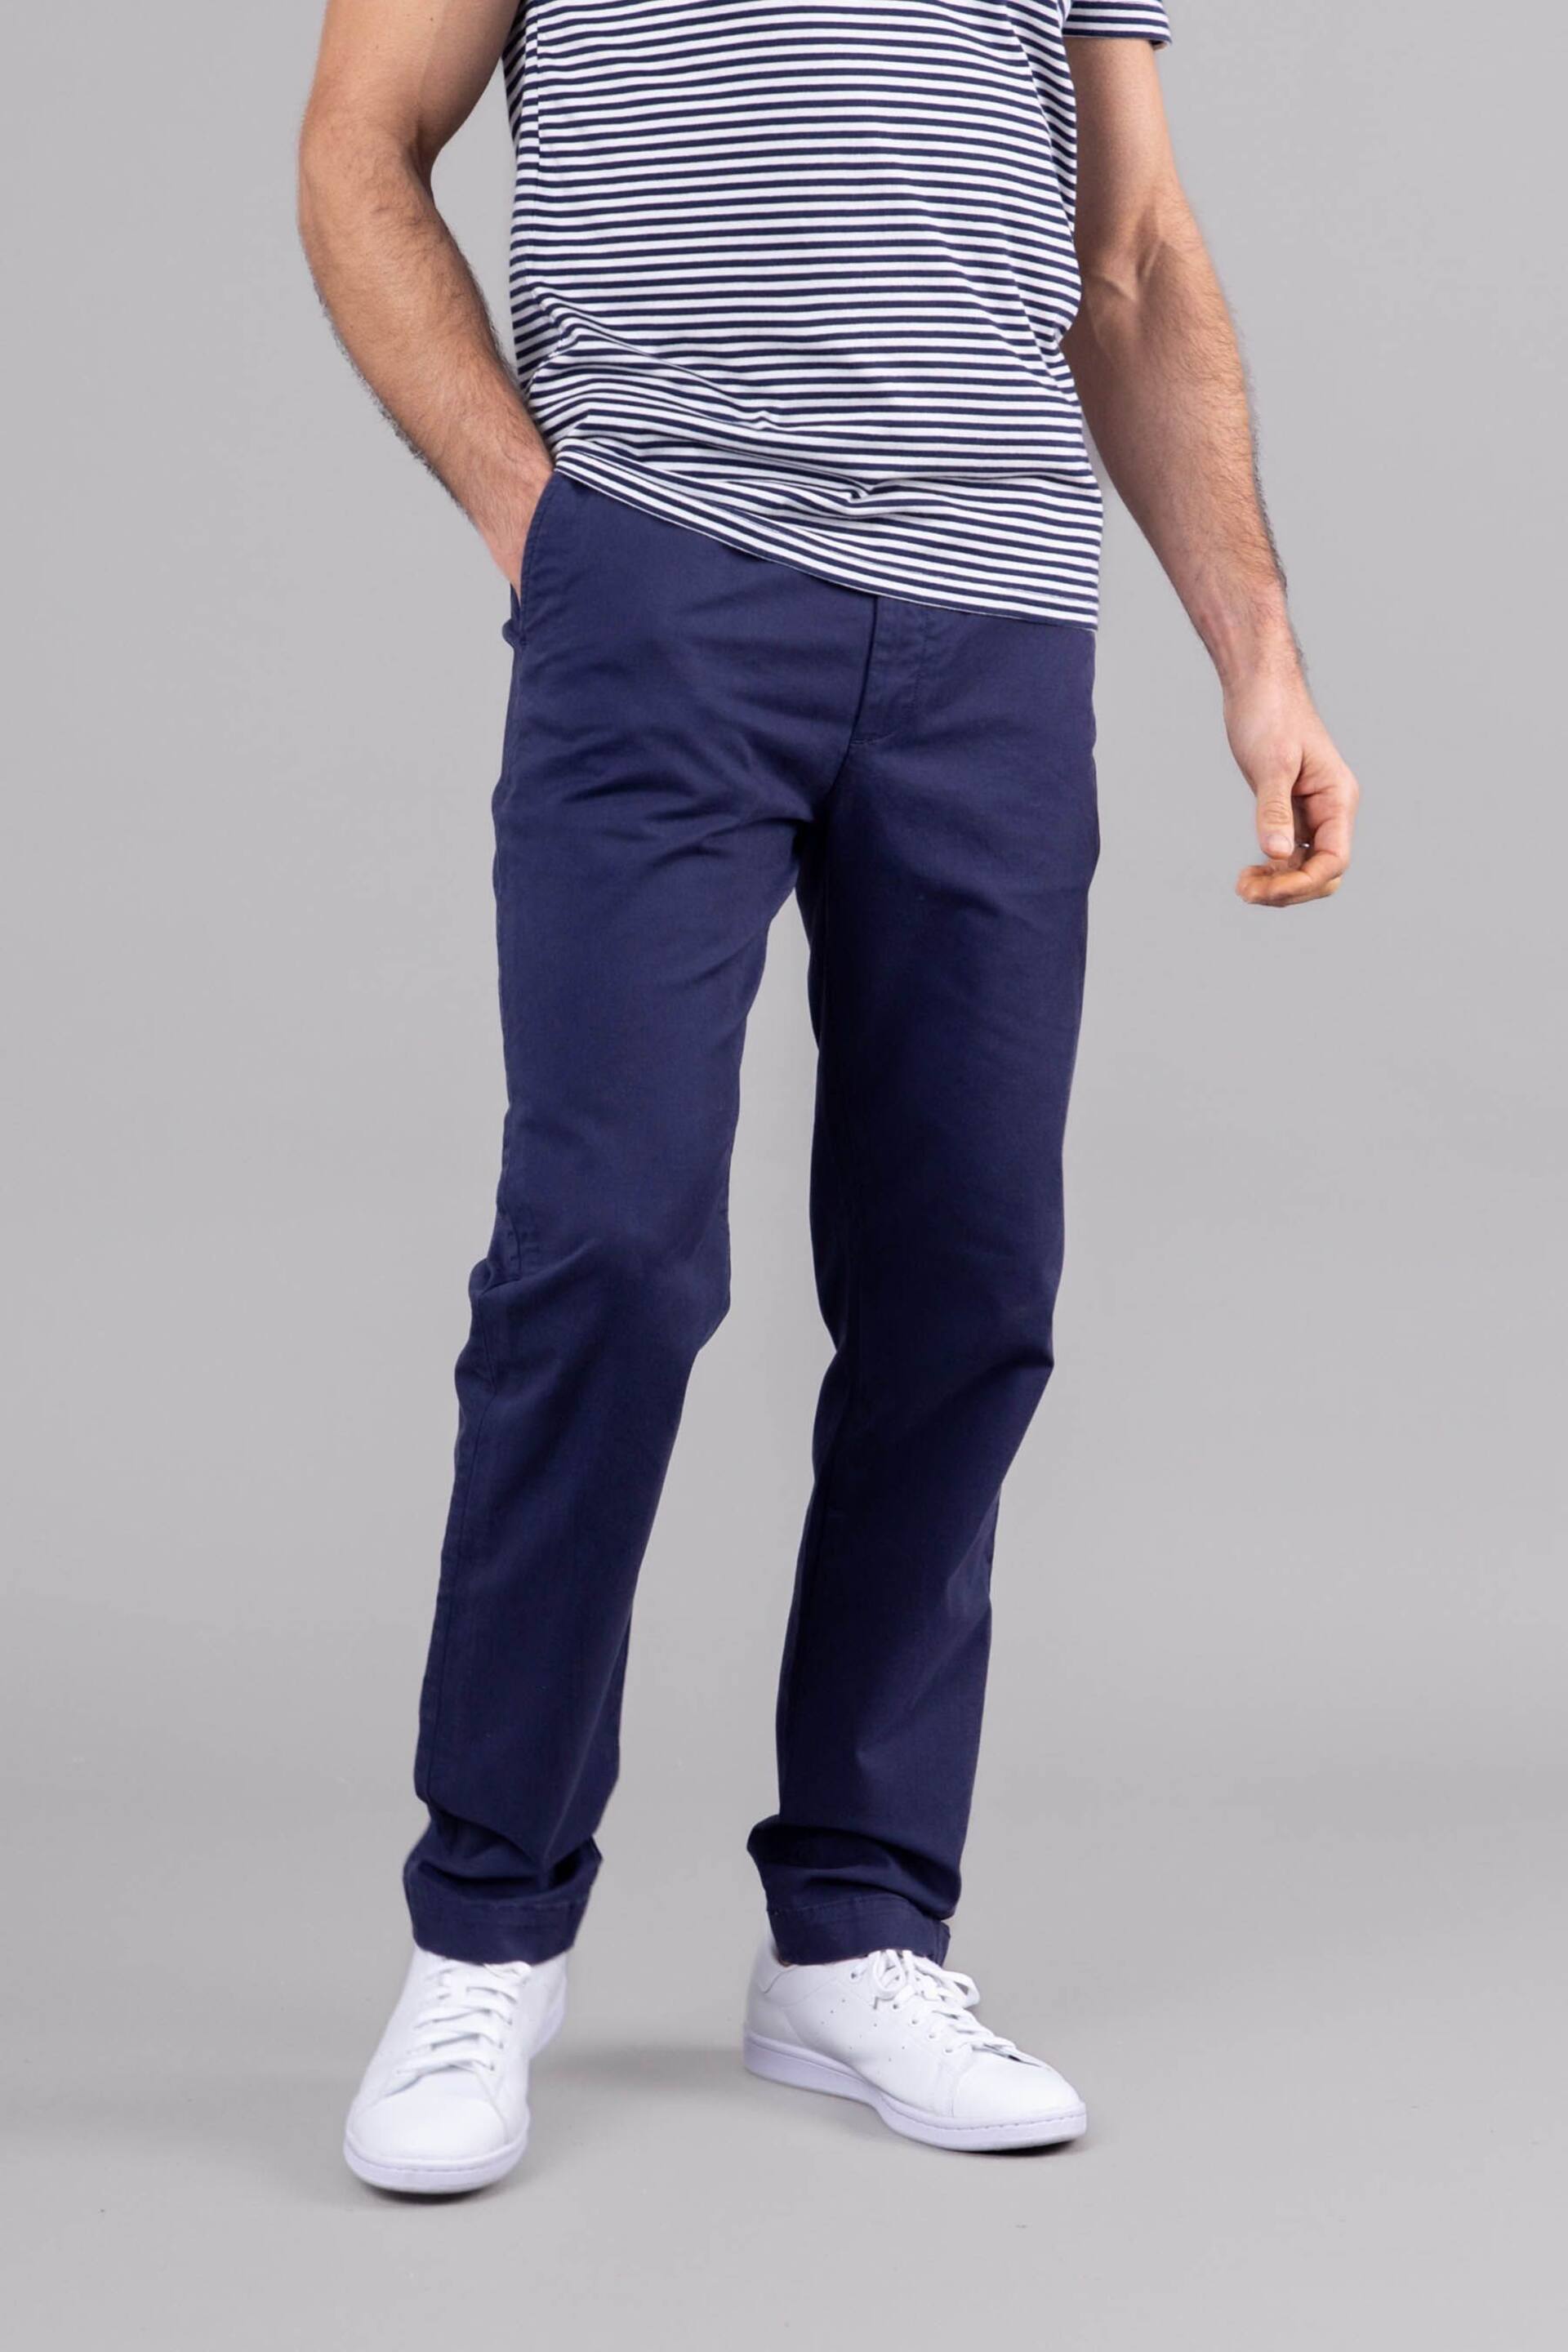 Lakeland Clothing Blue Noel Cotton Chinos Trousers - Image 1 of 5